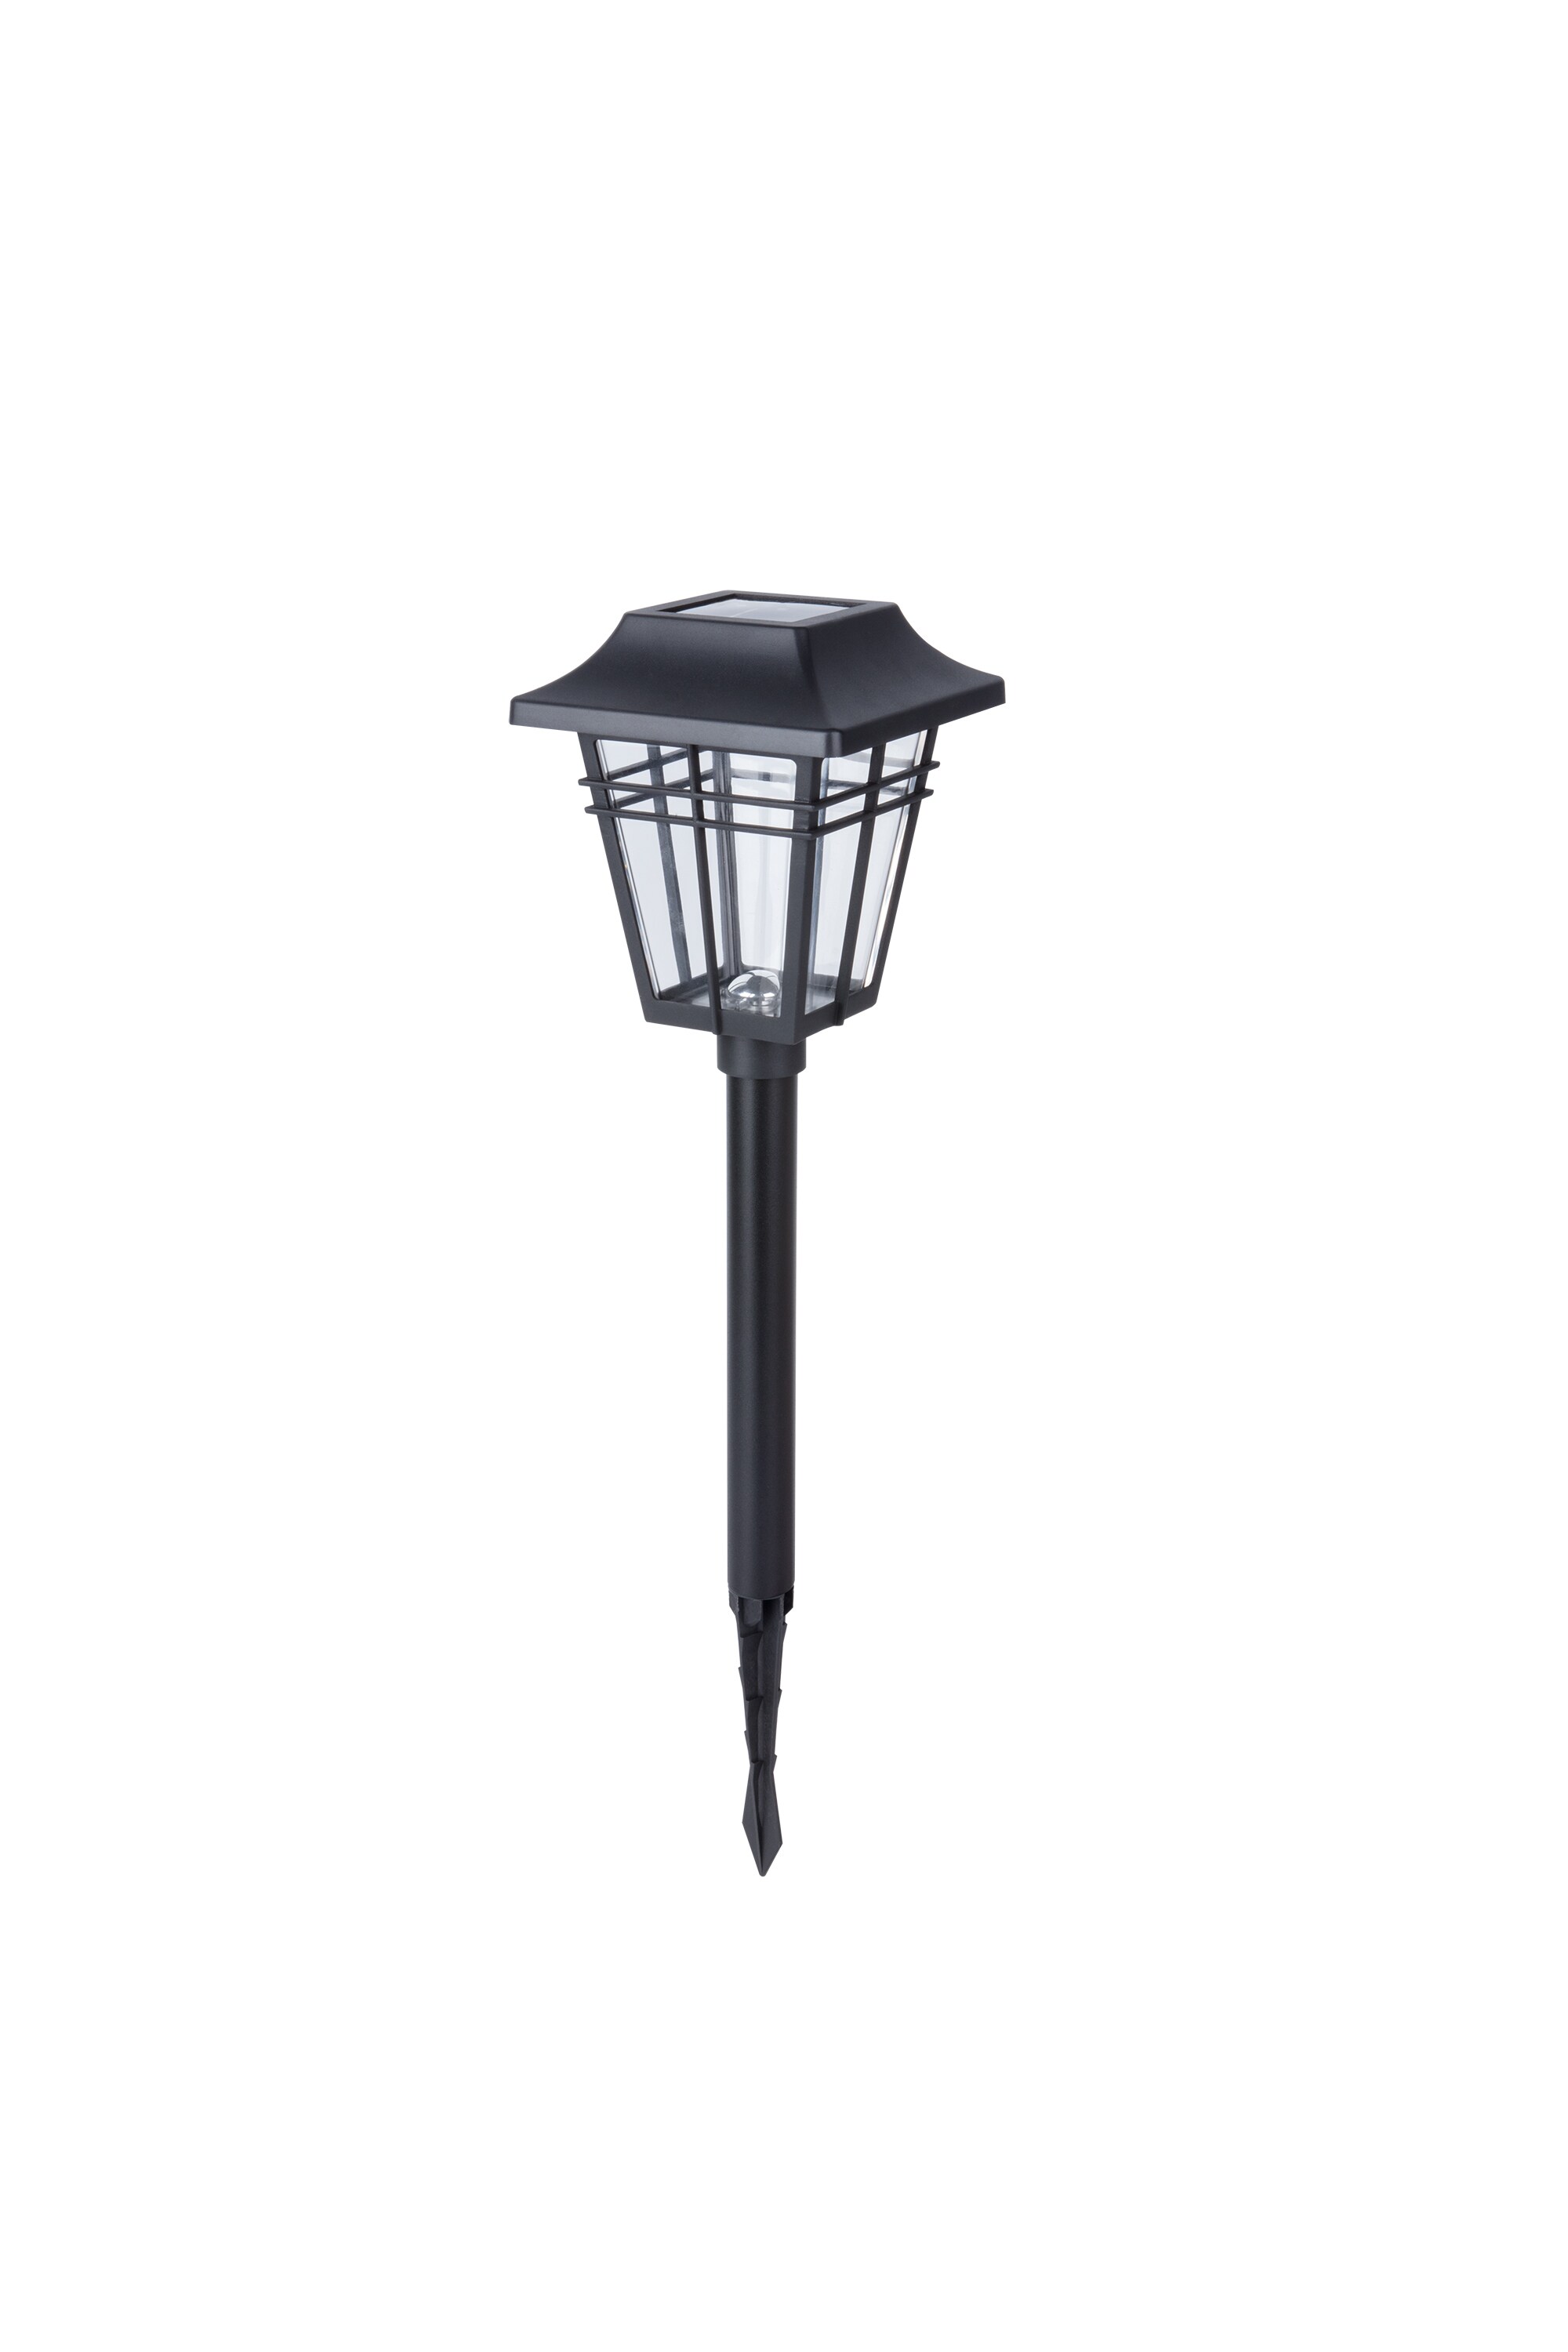 42-LED-8-10LM Solar Power Stree Light Motion Sensor Garden Security Lamp Outdoor 